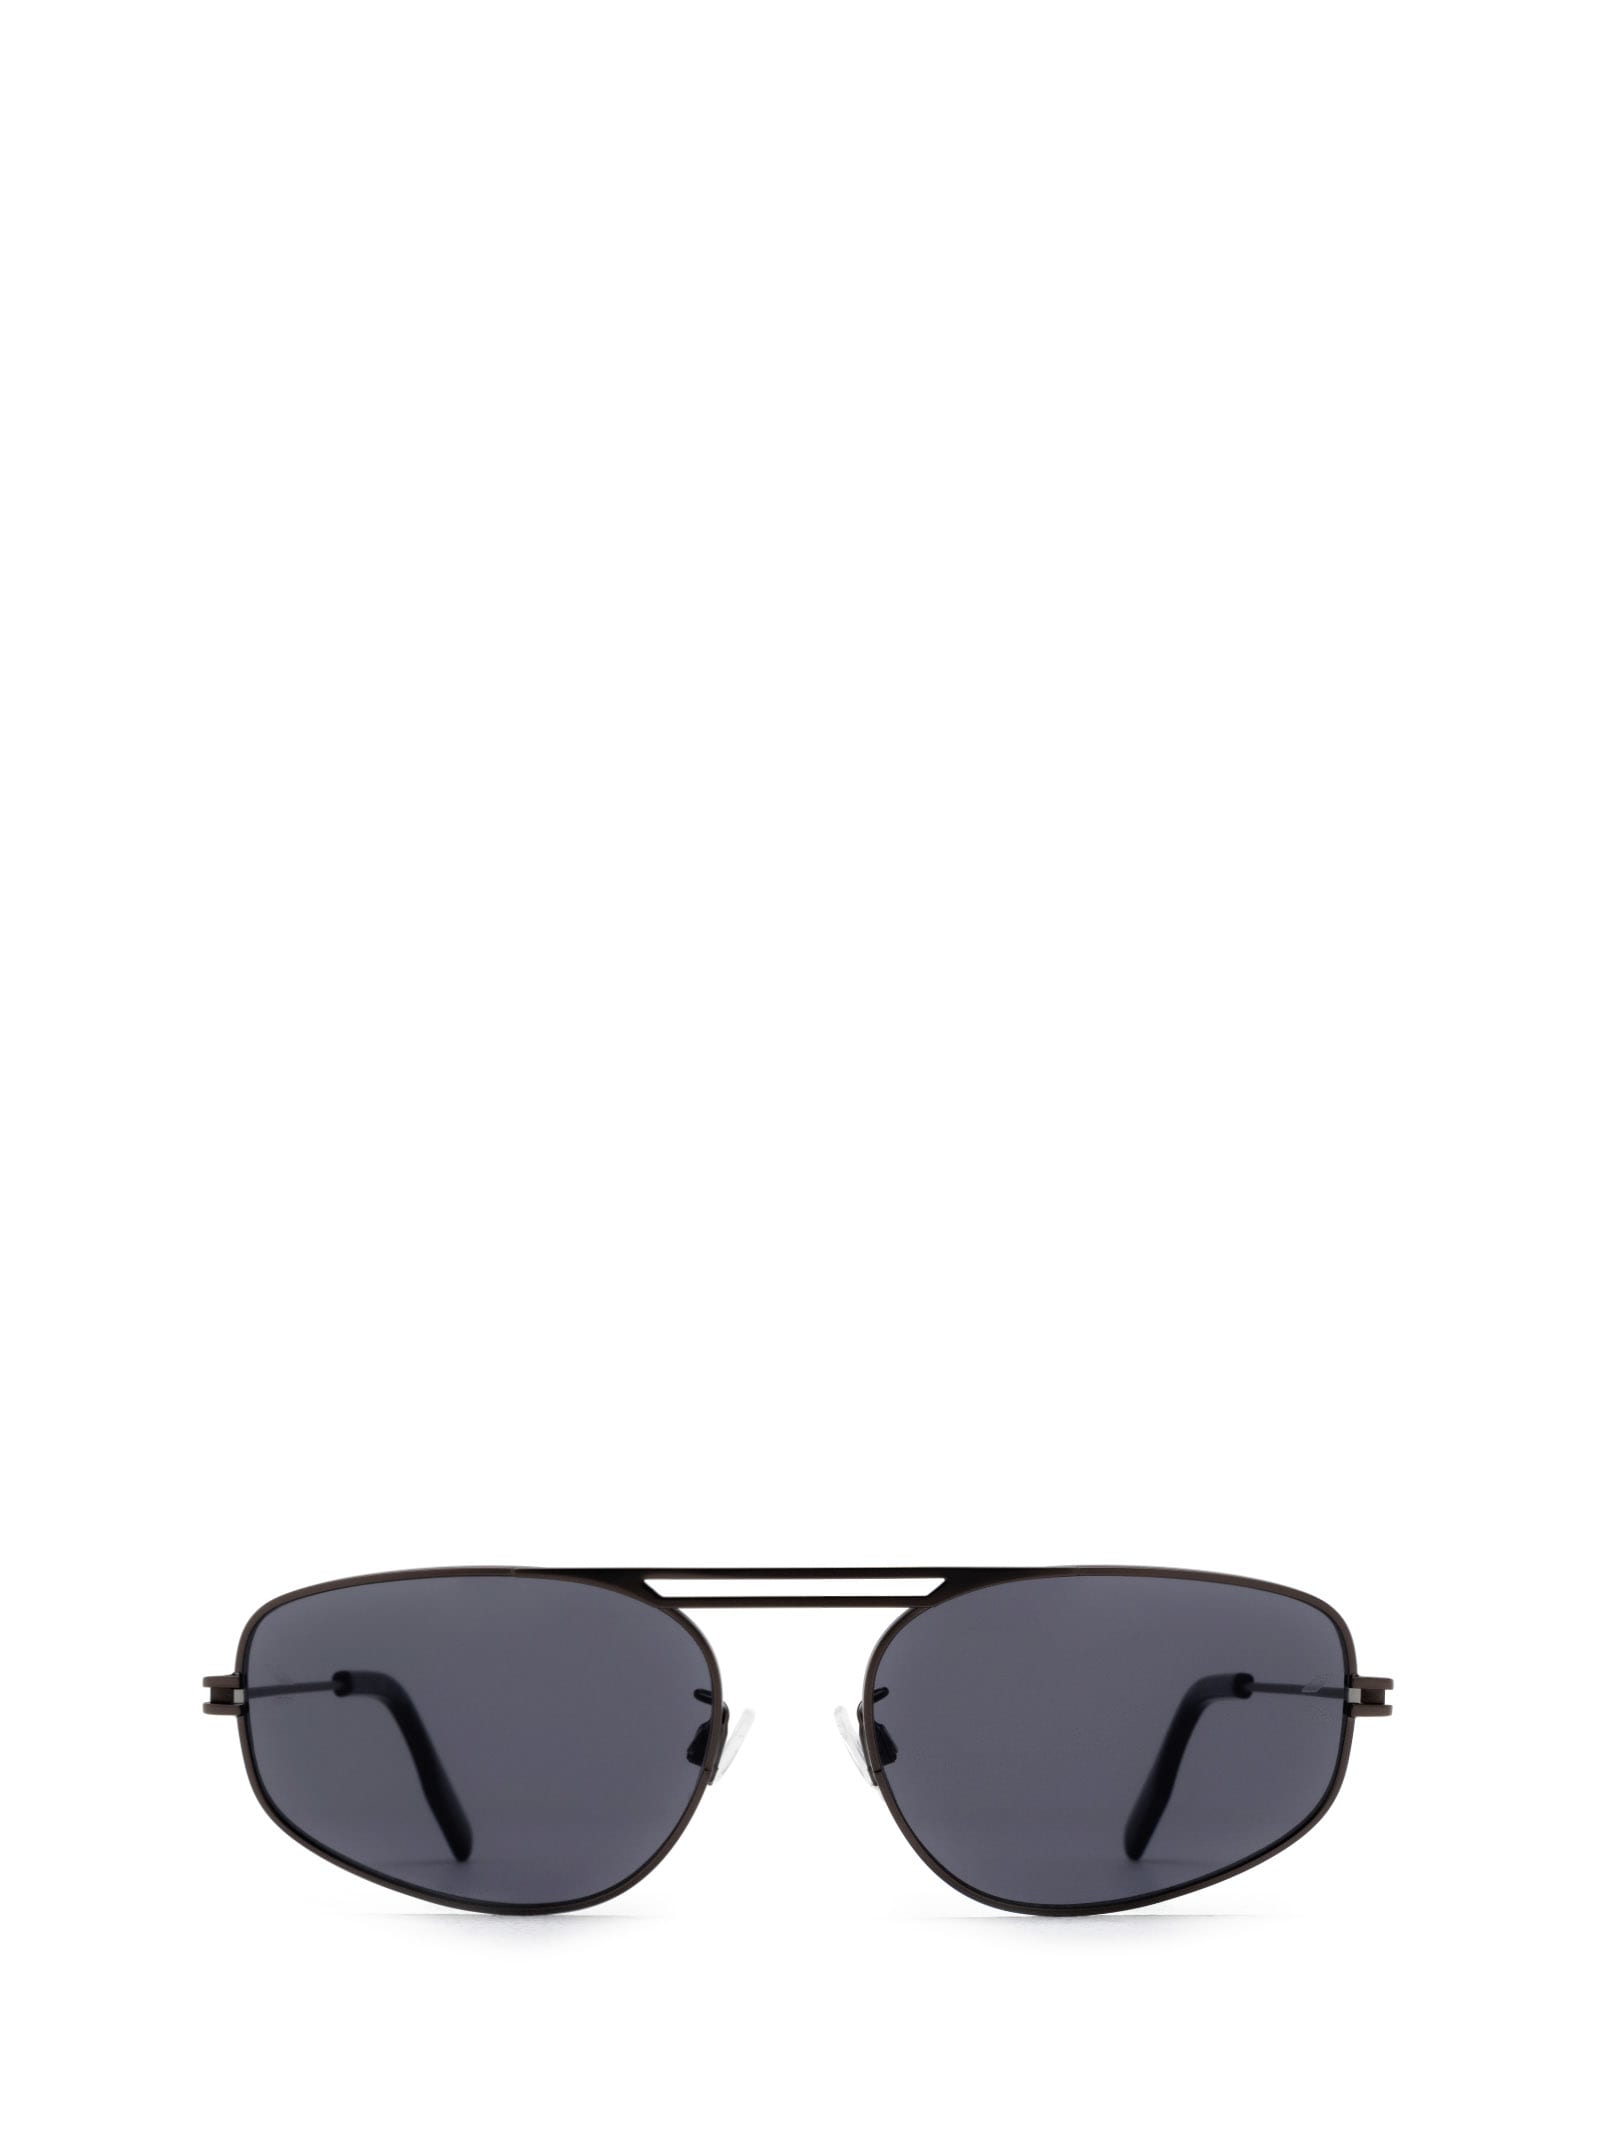 Alexander McQueen Eyewear Mq0392s Ruthenium Sunglasses サングラス-